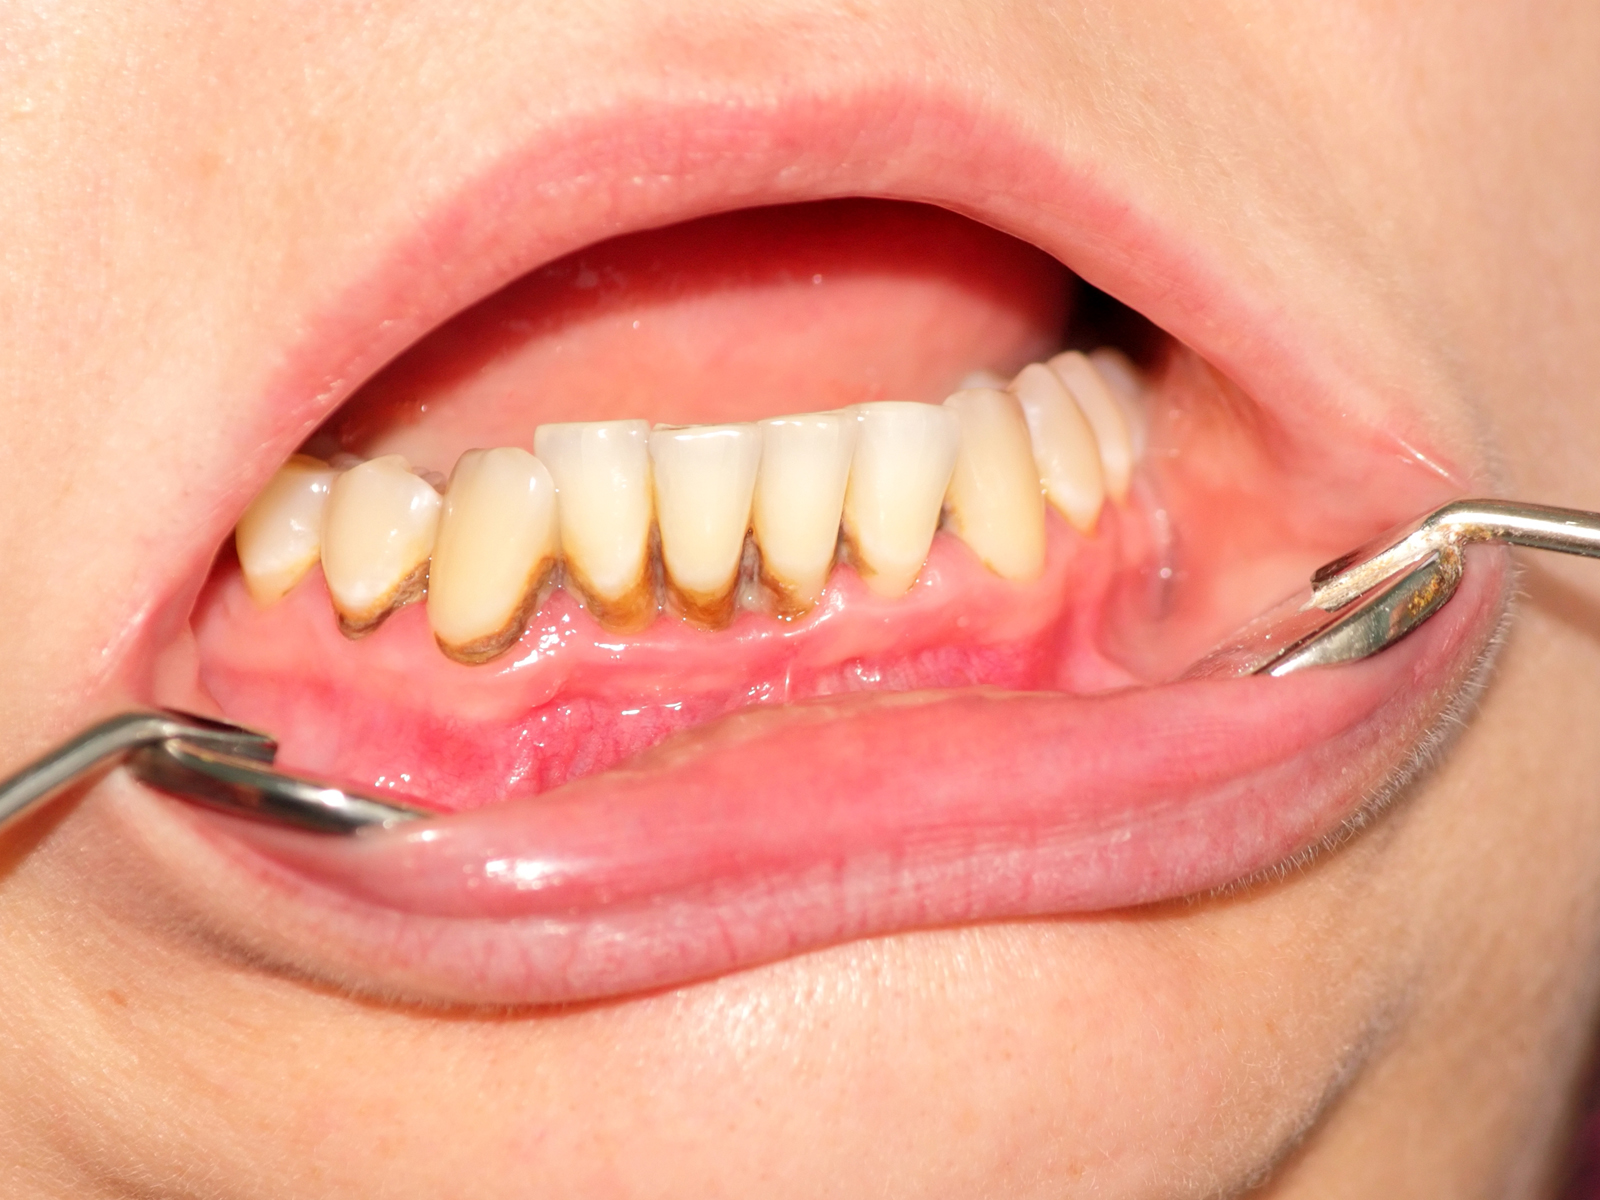 Can you scrape tartar off your teeth?